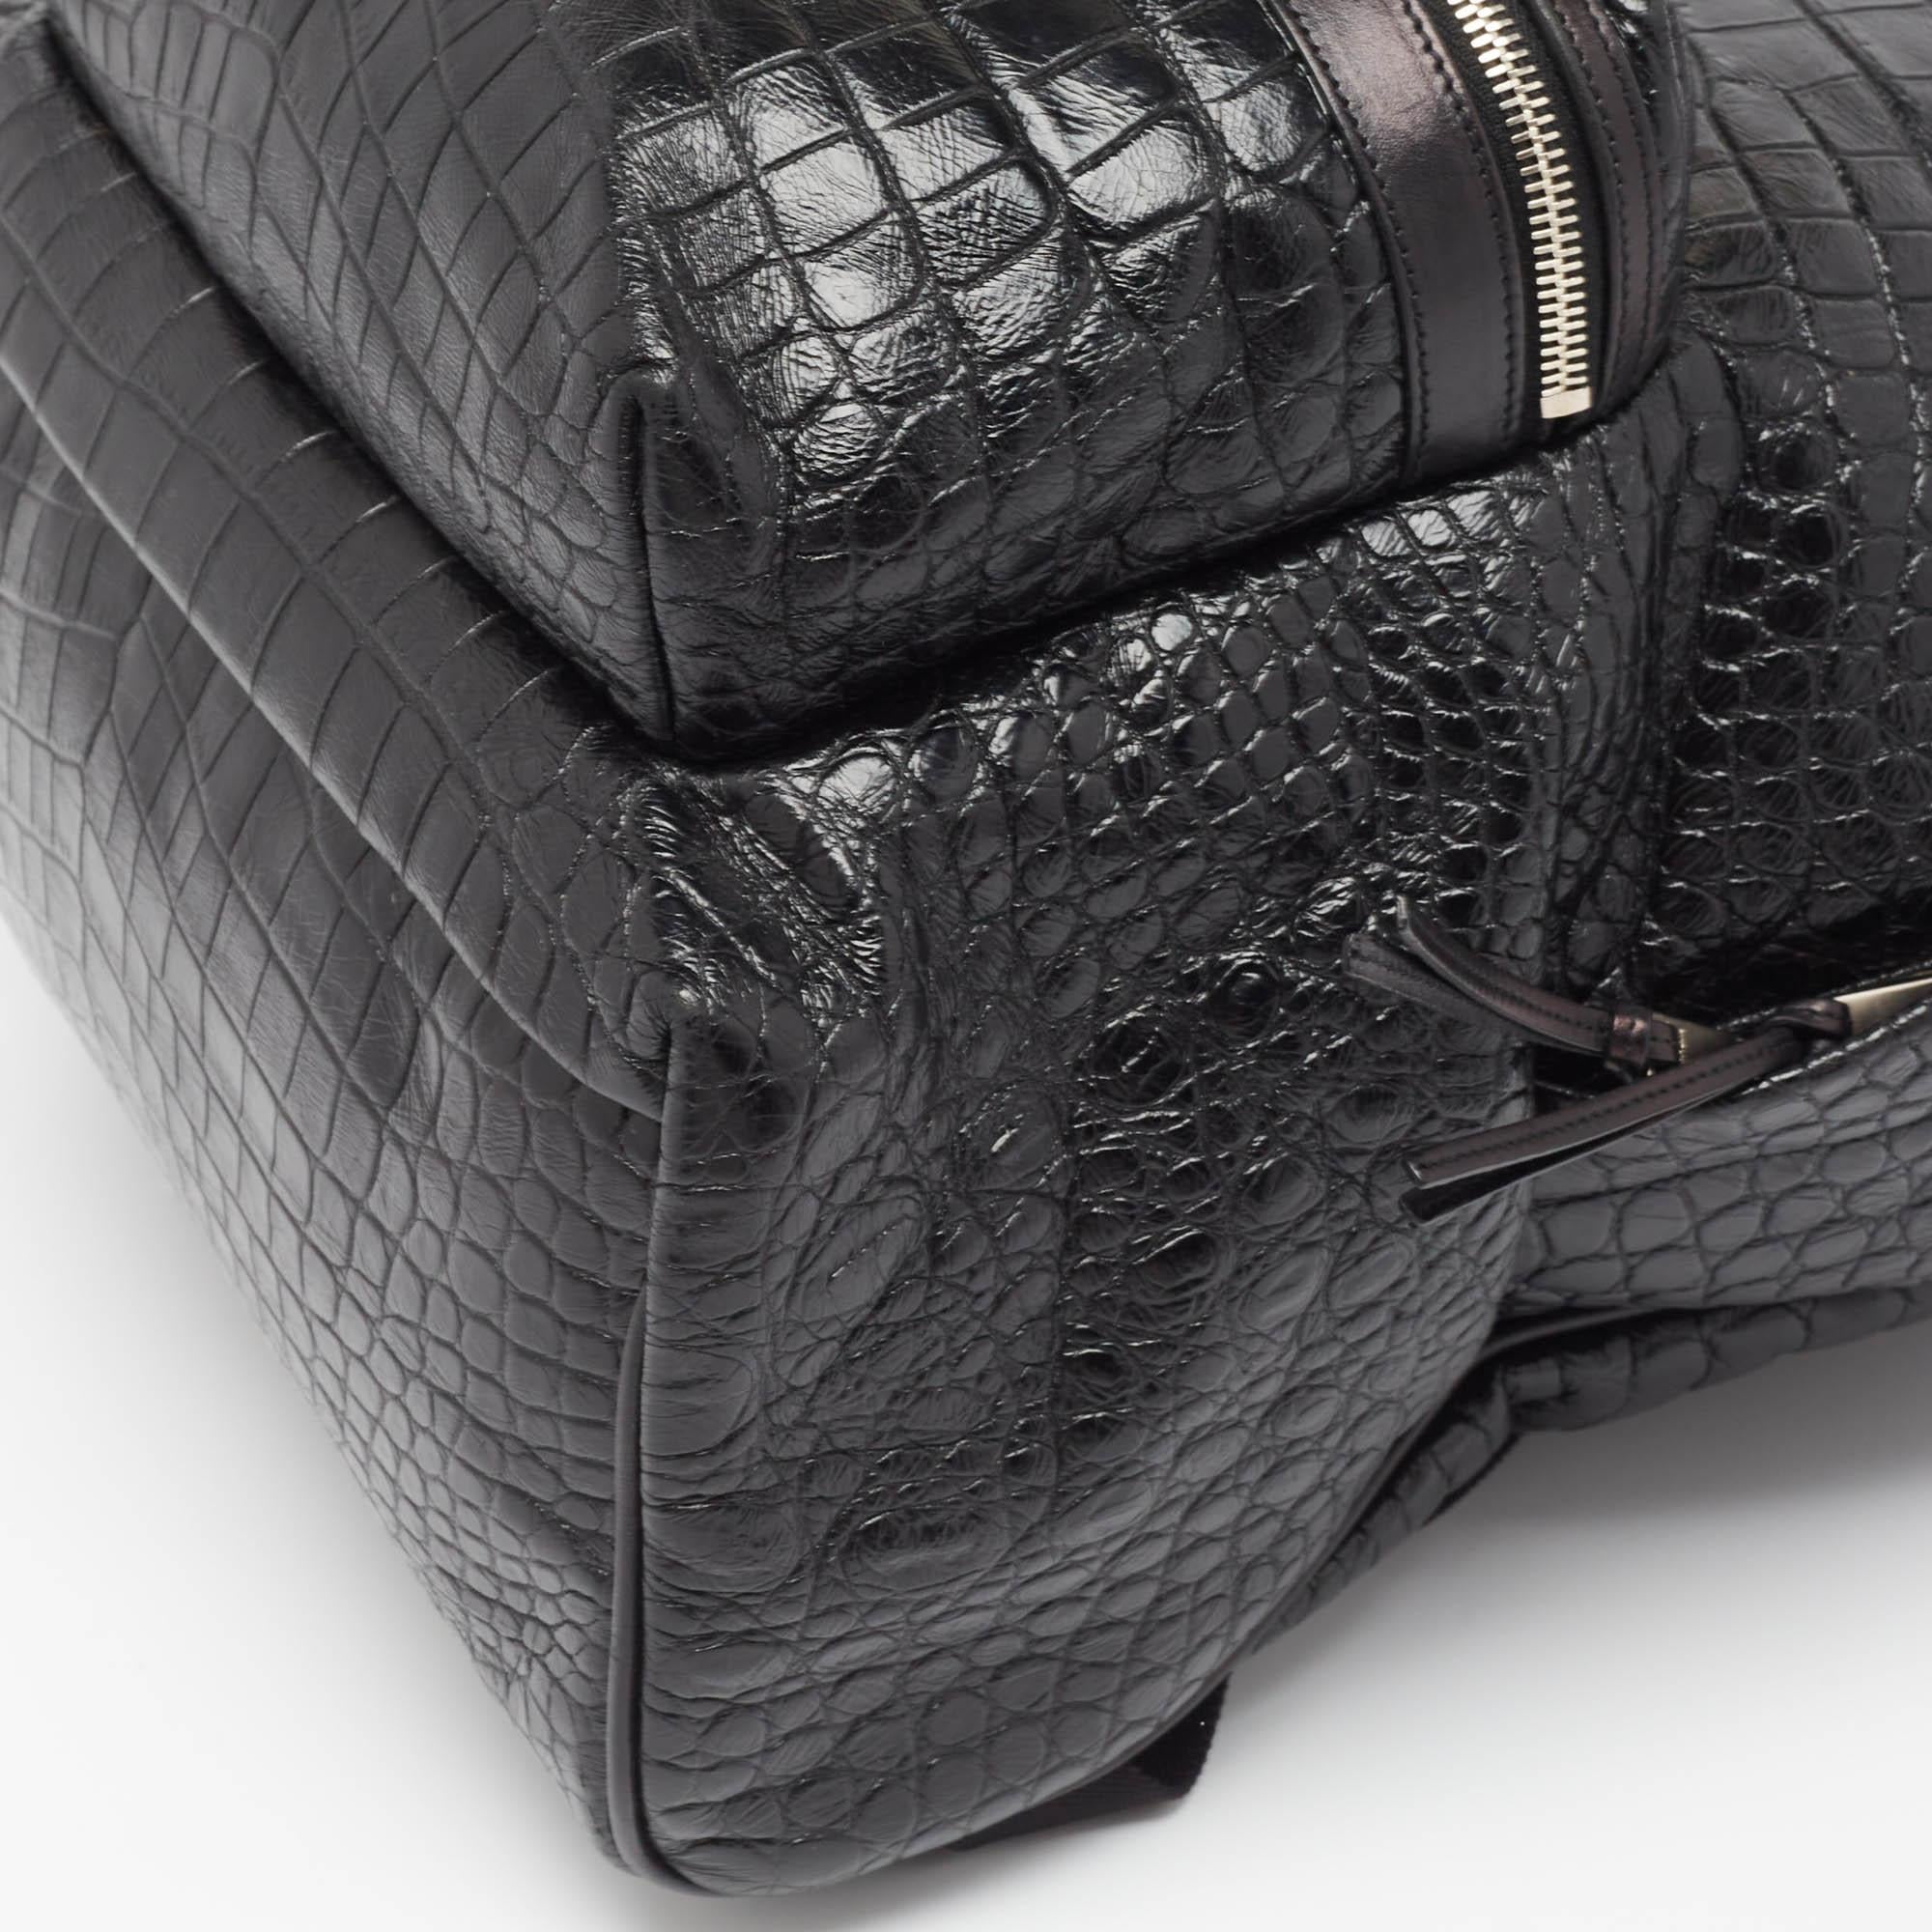  Saint Laurent Black Croc Embossed Leather City Backpack 3